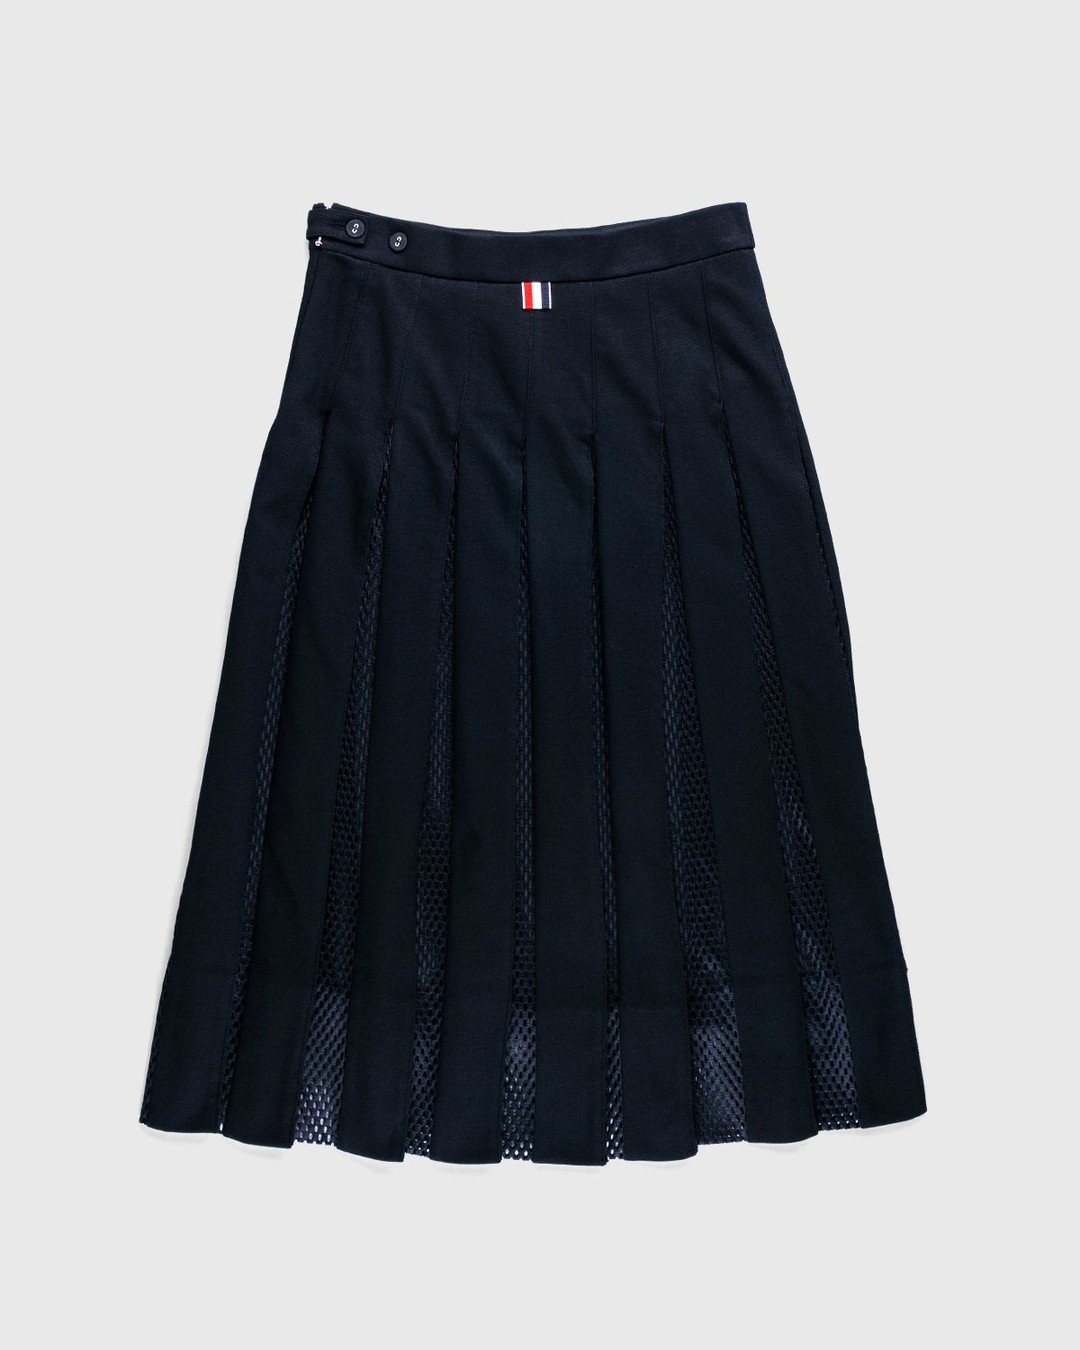 Thom Browne x Highsnobiety – Men's Pleated Mesh Skirt Black - Midi - Black - Image 2